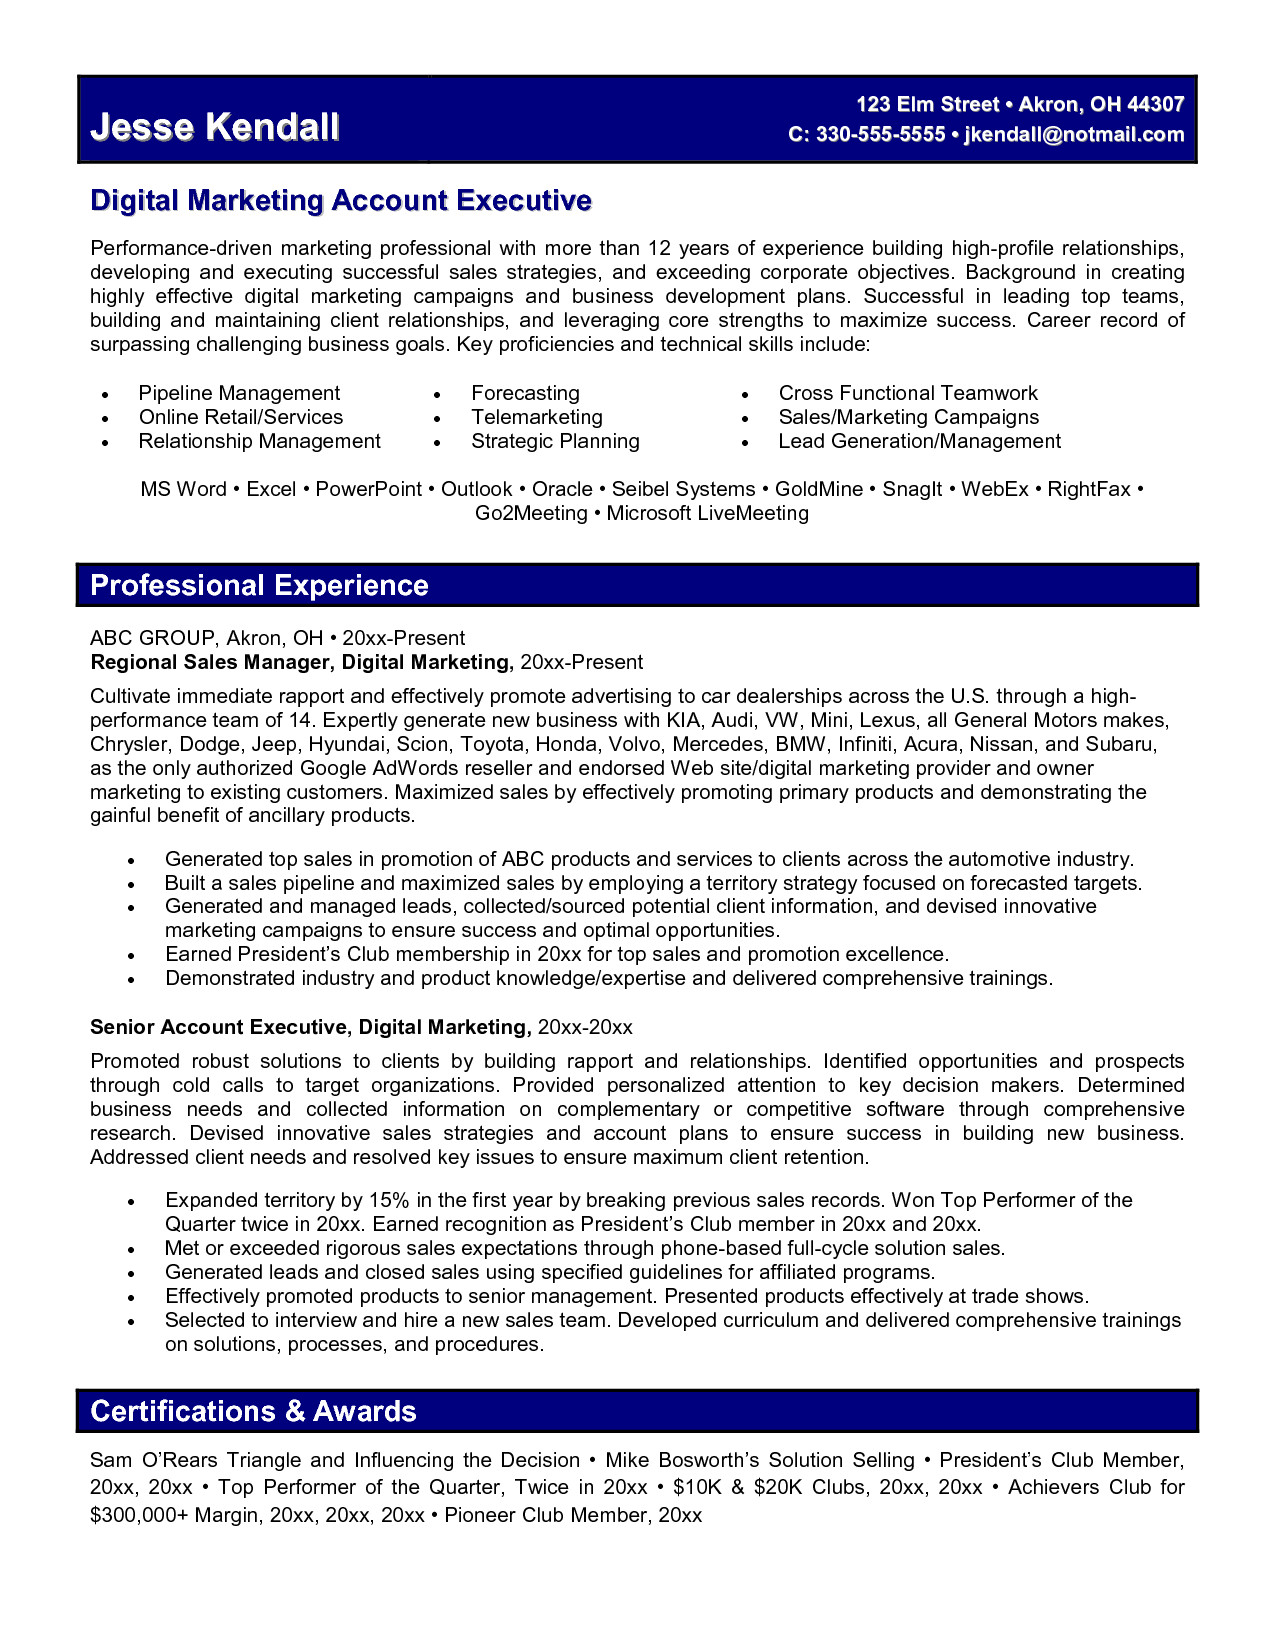 Digital Marketing Resume Fotolip Rich image and